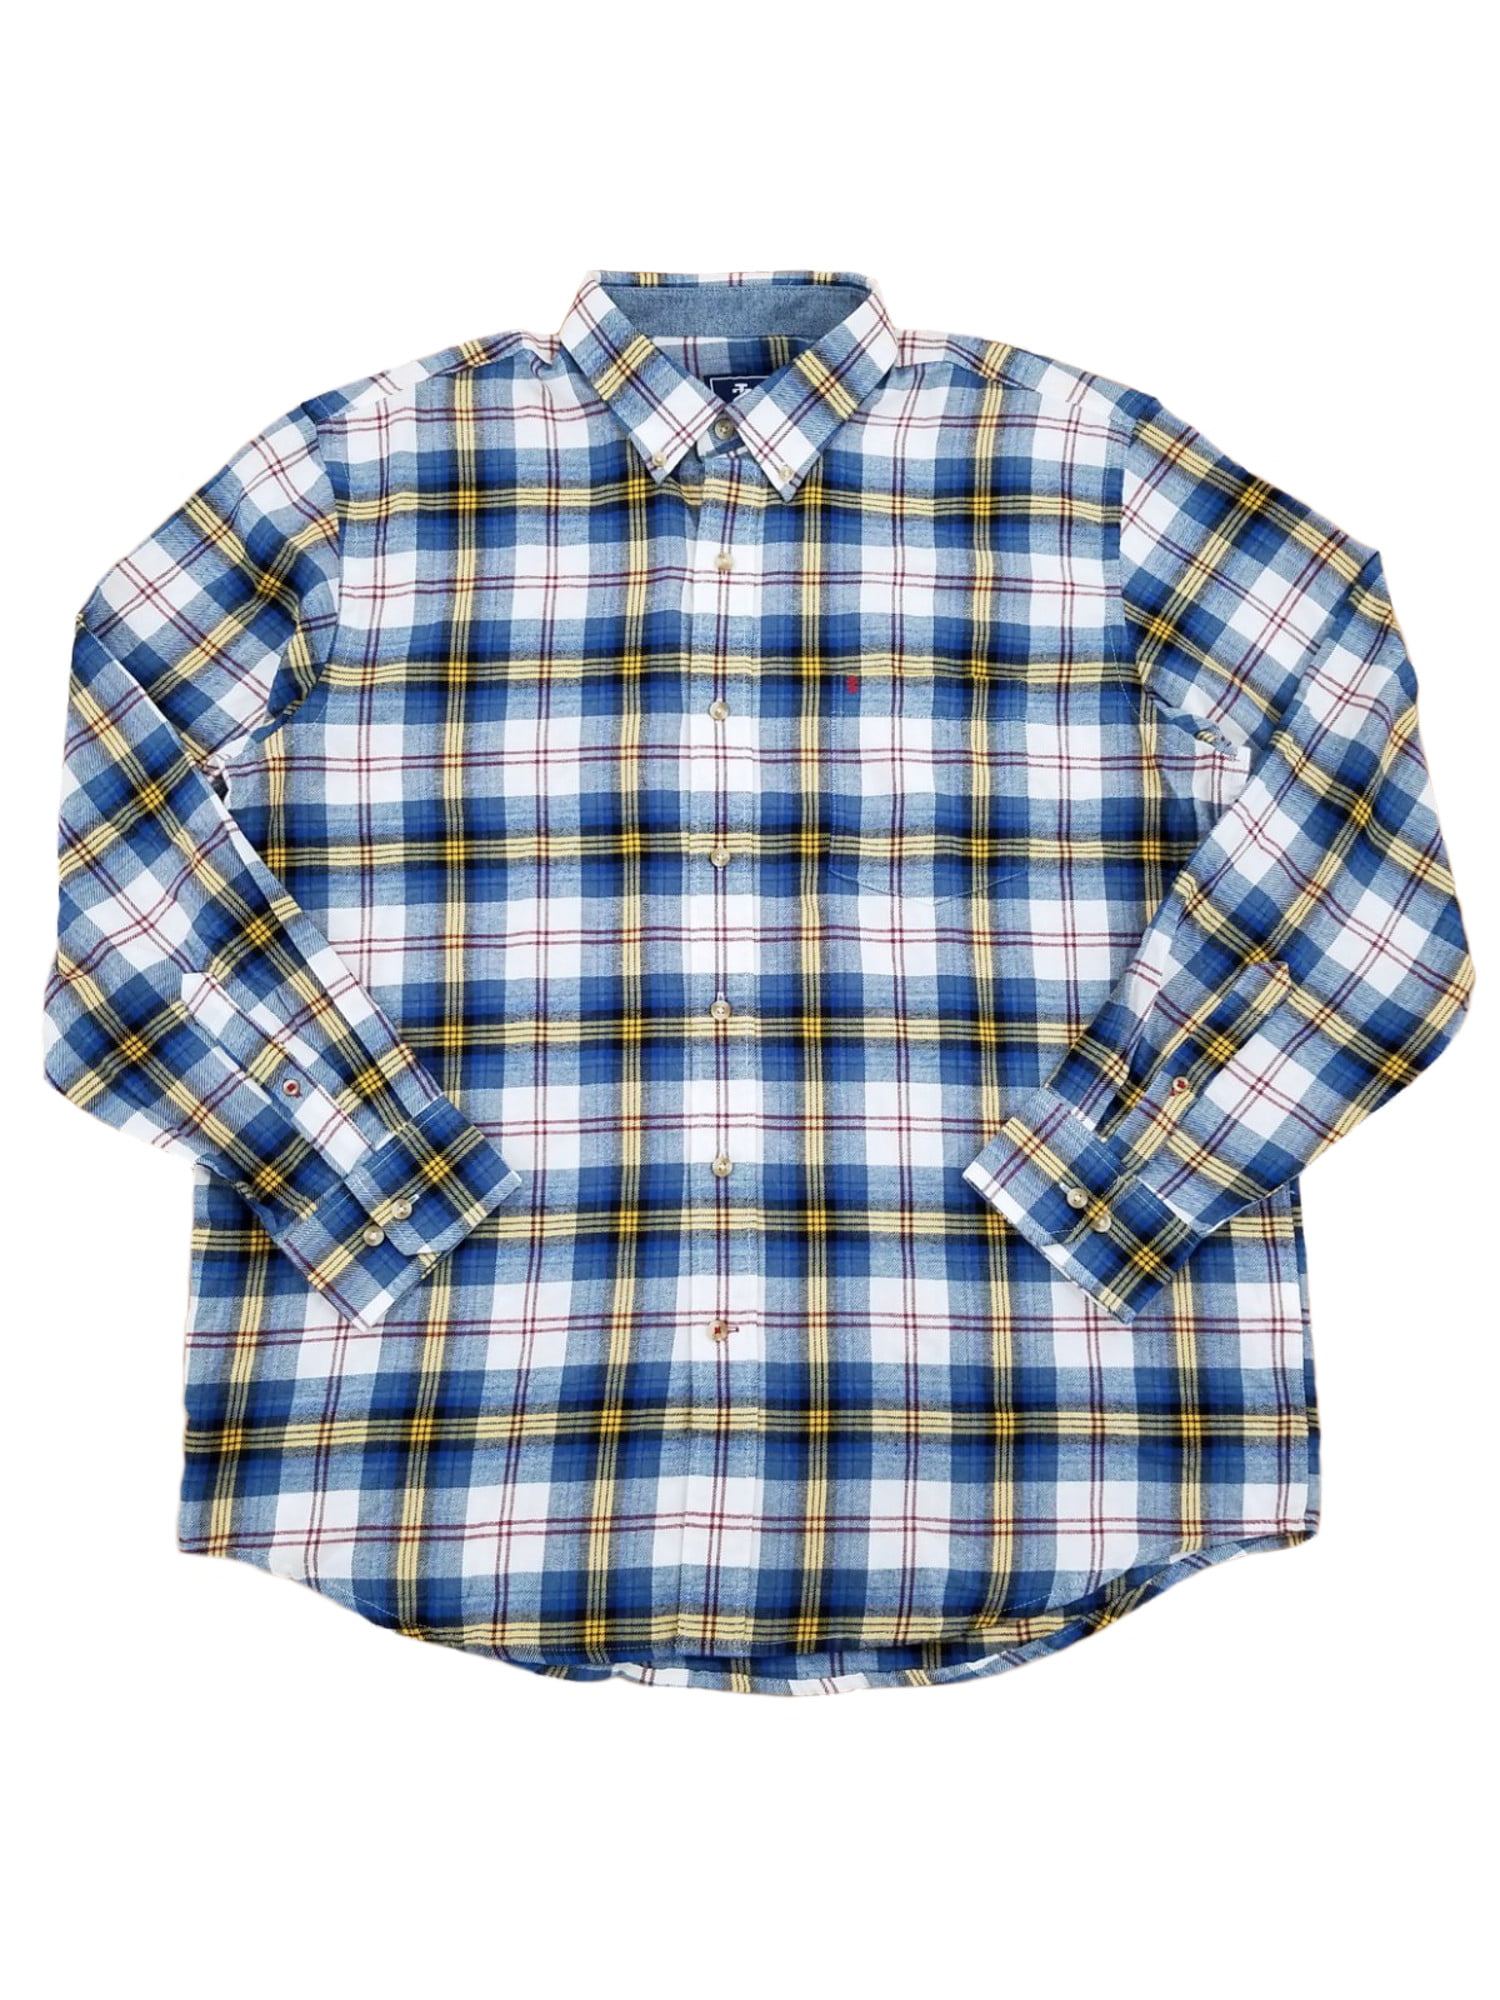 Plaid Long Sleeve Flannel Shirt M or L IZOD Blue Tones Pick One Soft 